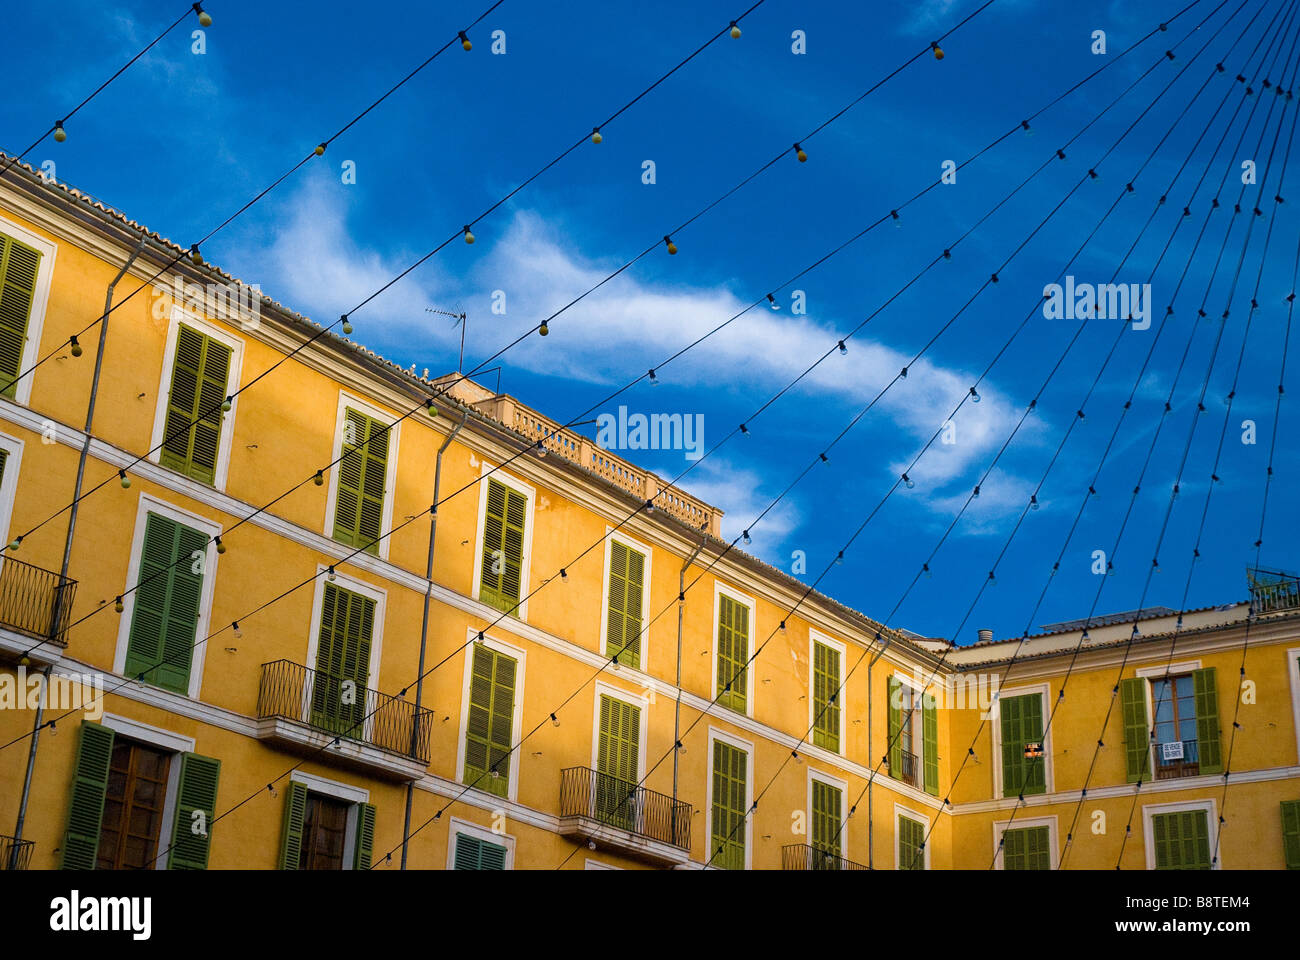 Yellow townhouses in Plaza Major with a row of lightbulbs string across. Palma, Mallorca. Stock Photo